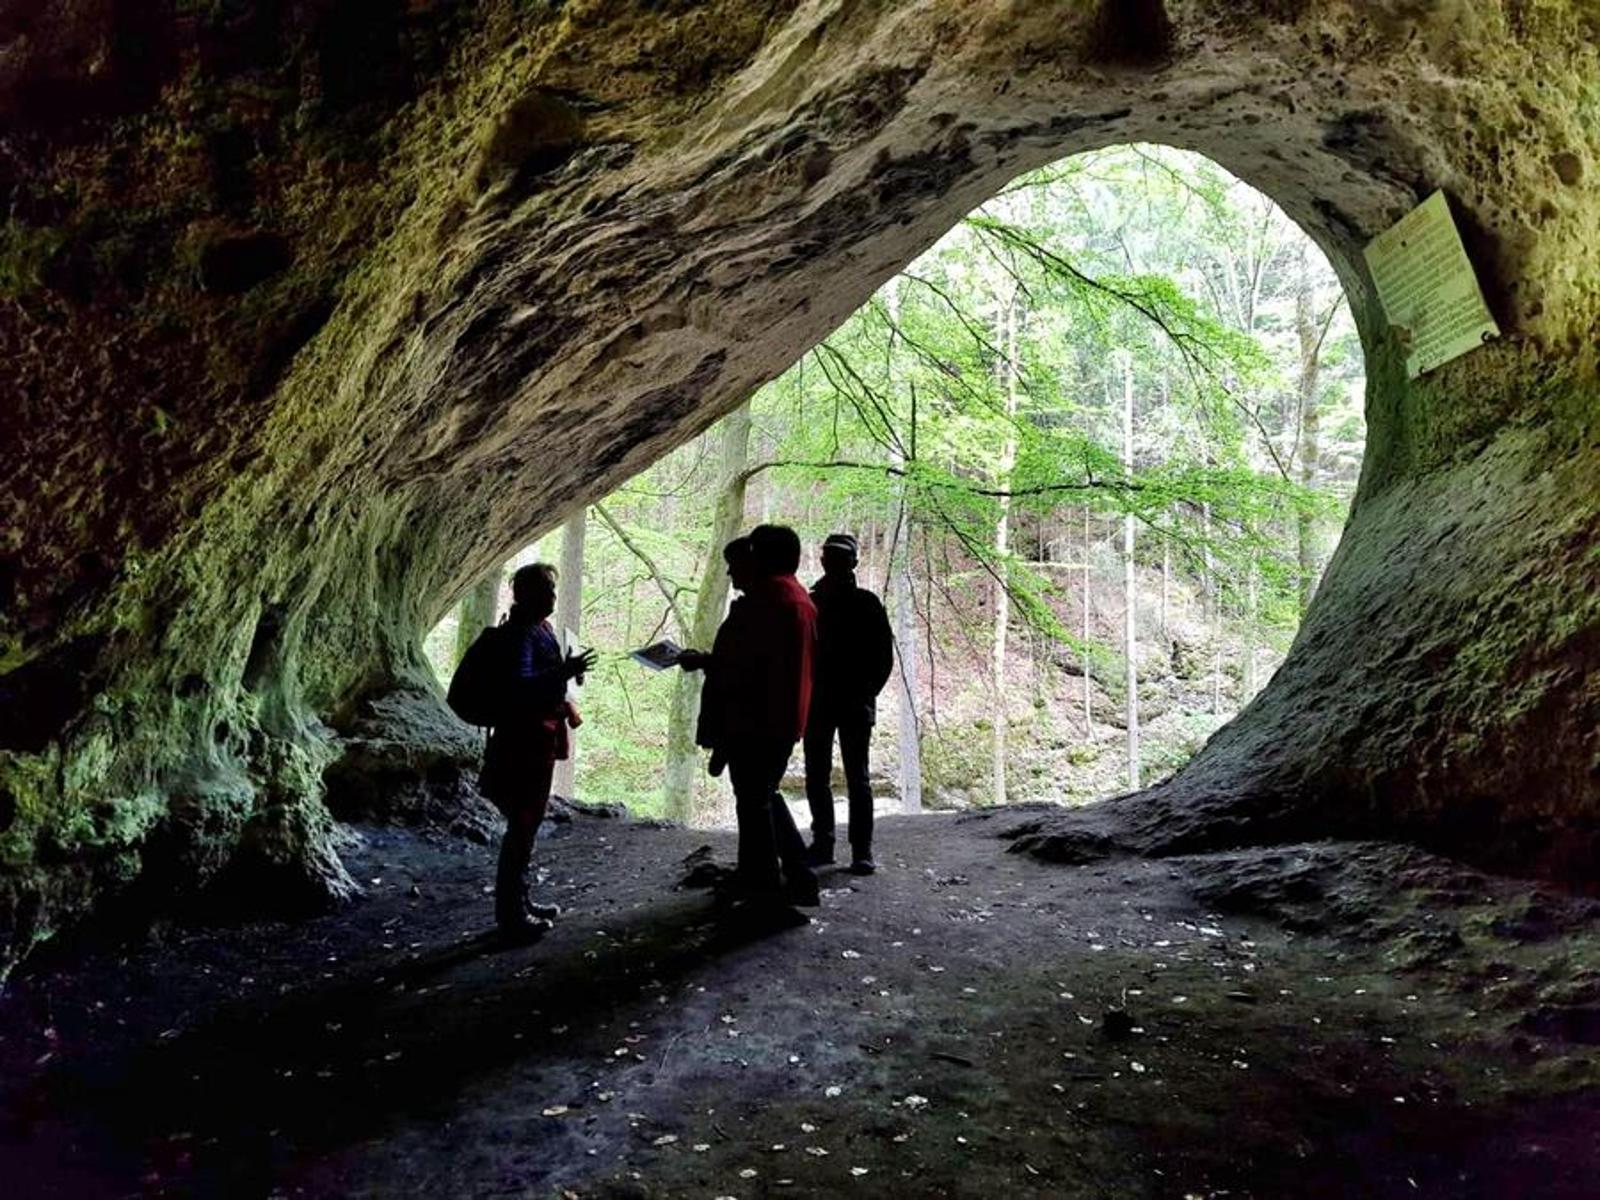 Pfingstmontags-Wanderung zum Hasenloch (Höhle)
                 title=